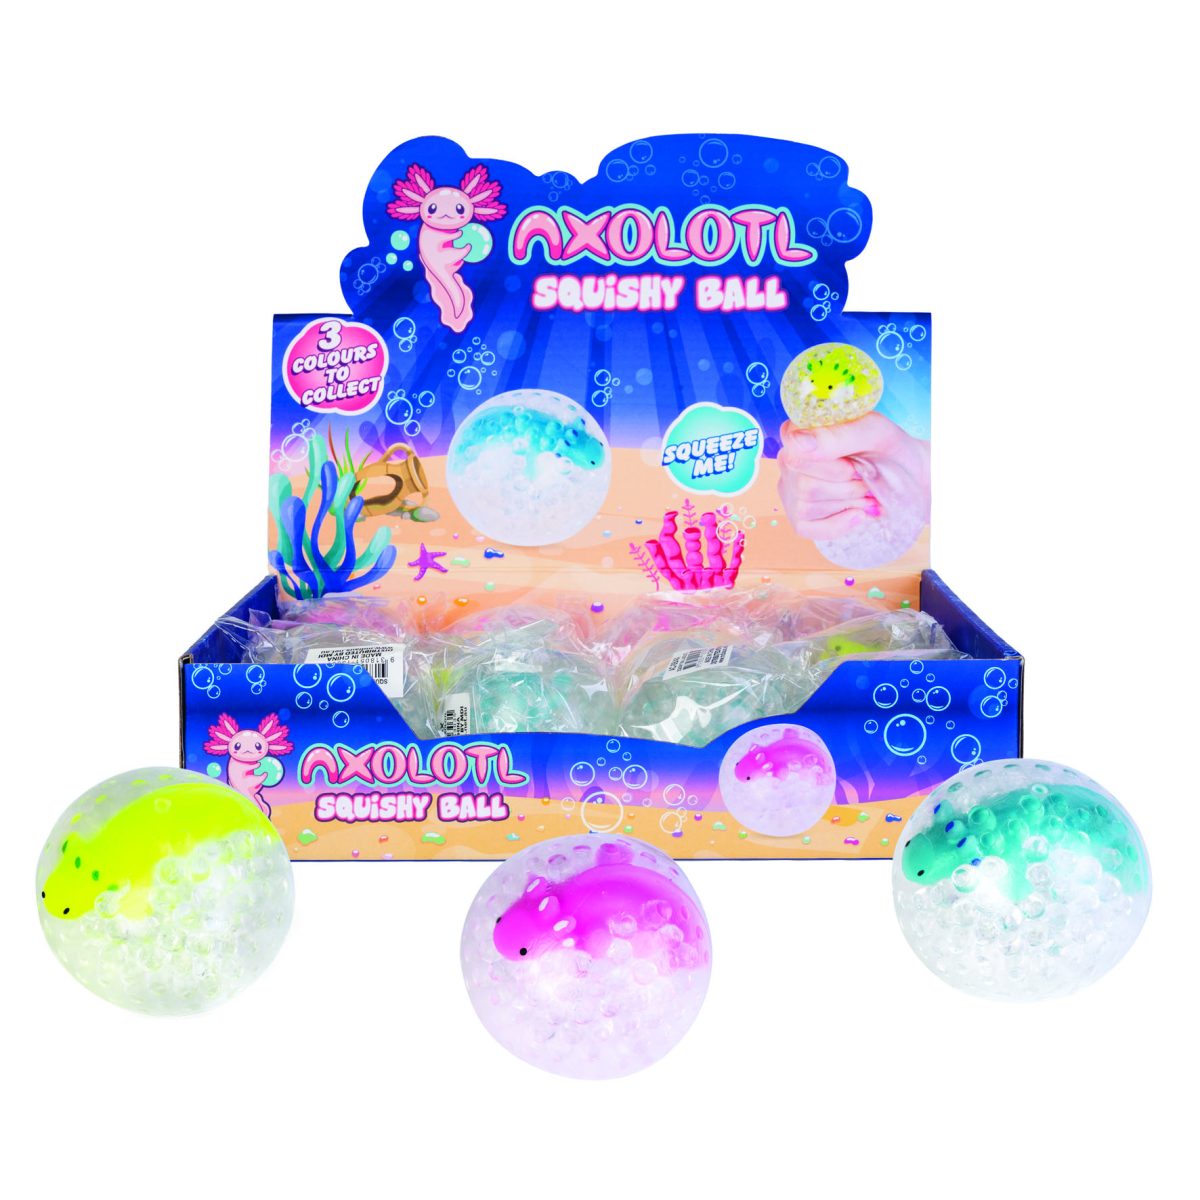 Axolotl Squishy Ball